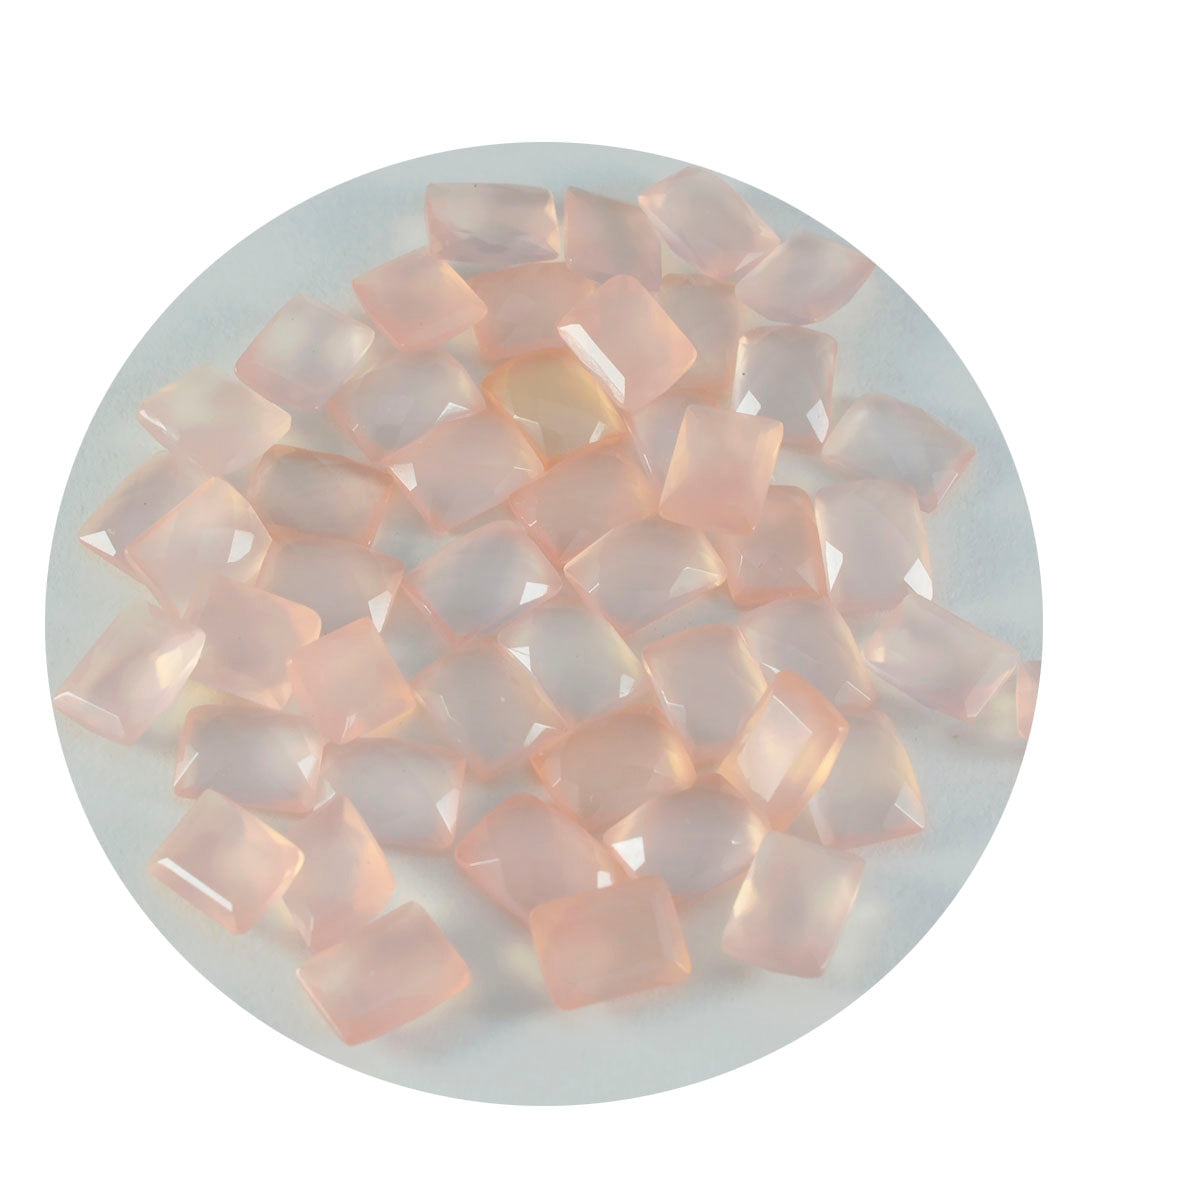 Riyogems 1PC roze rozenkwarts gefacetteerd 4x6 mm achthoekige vorm zoete kwaliteit losse edelsteen